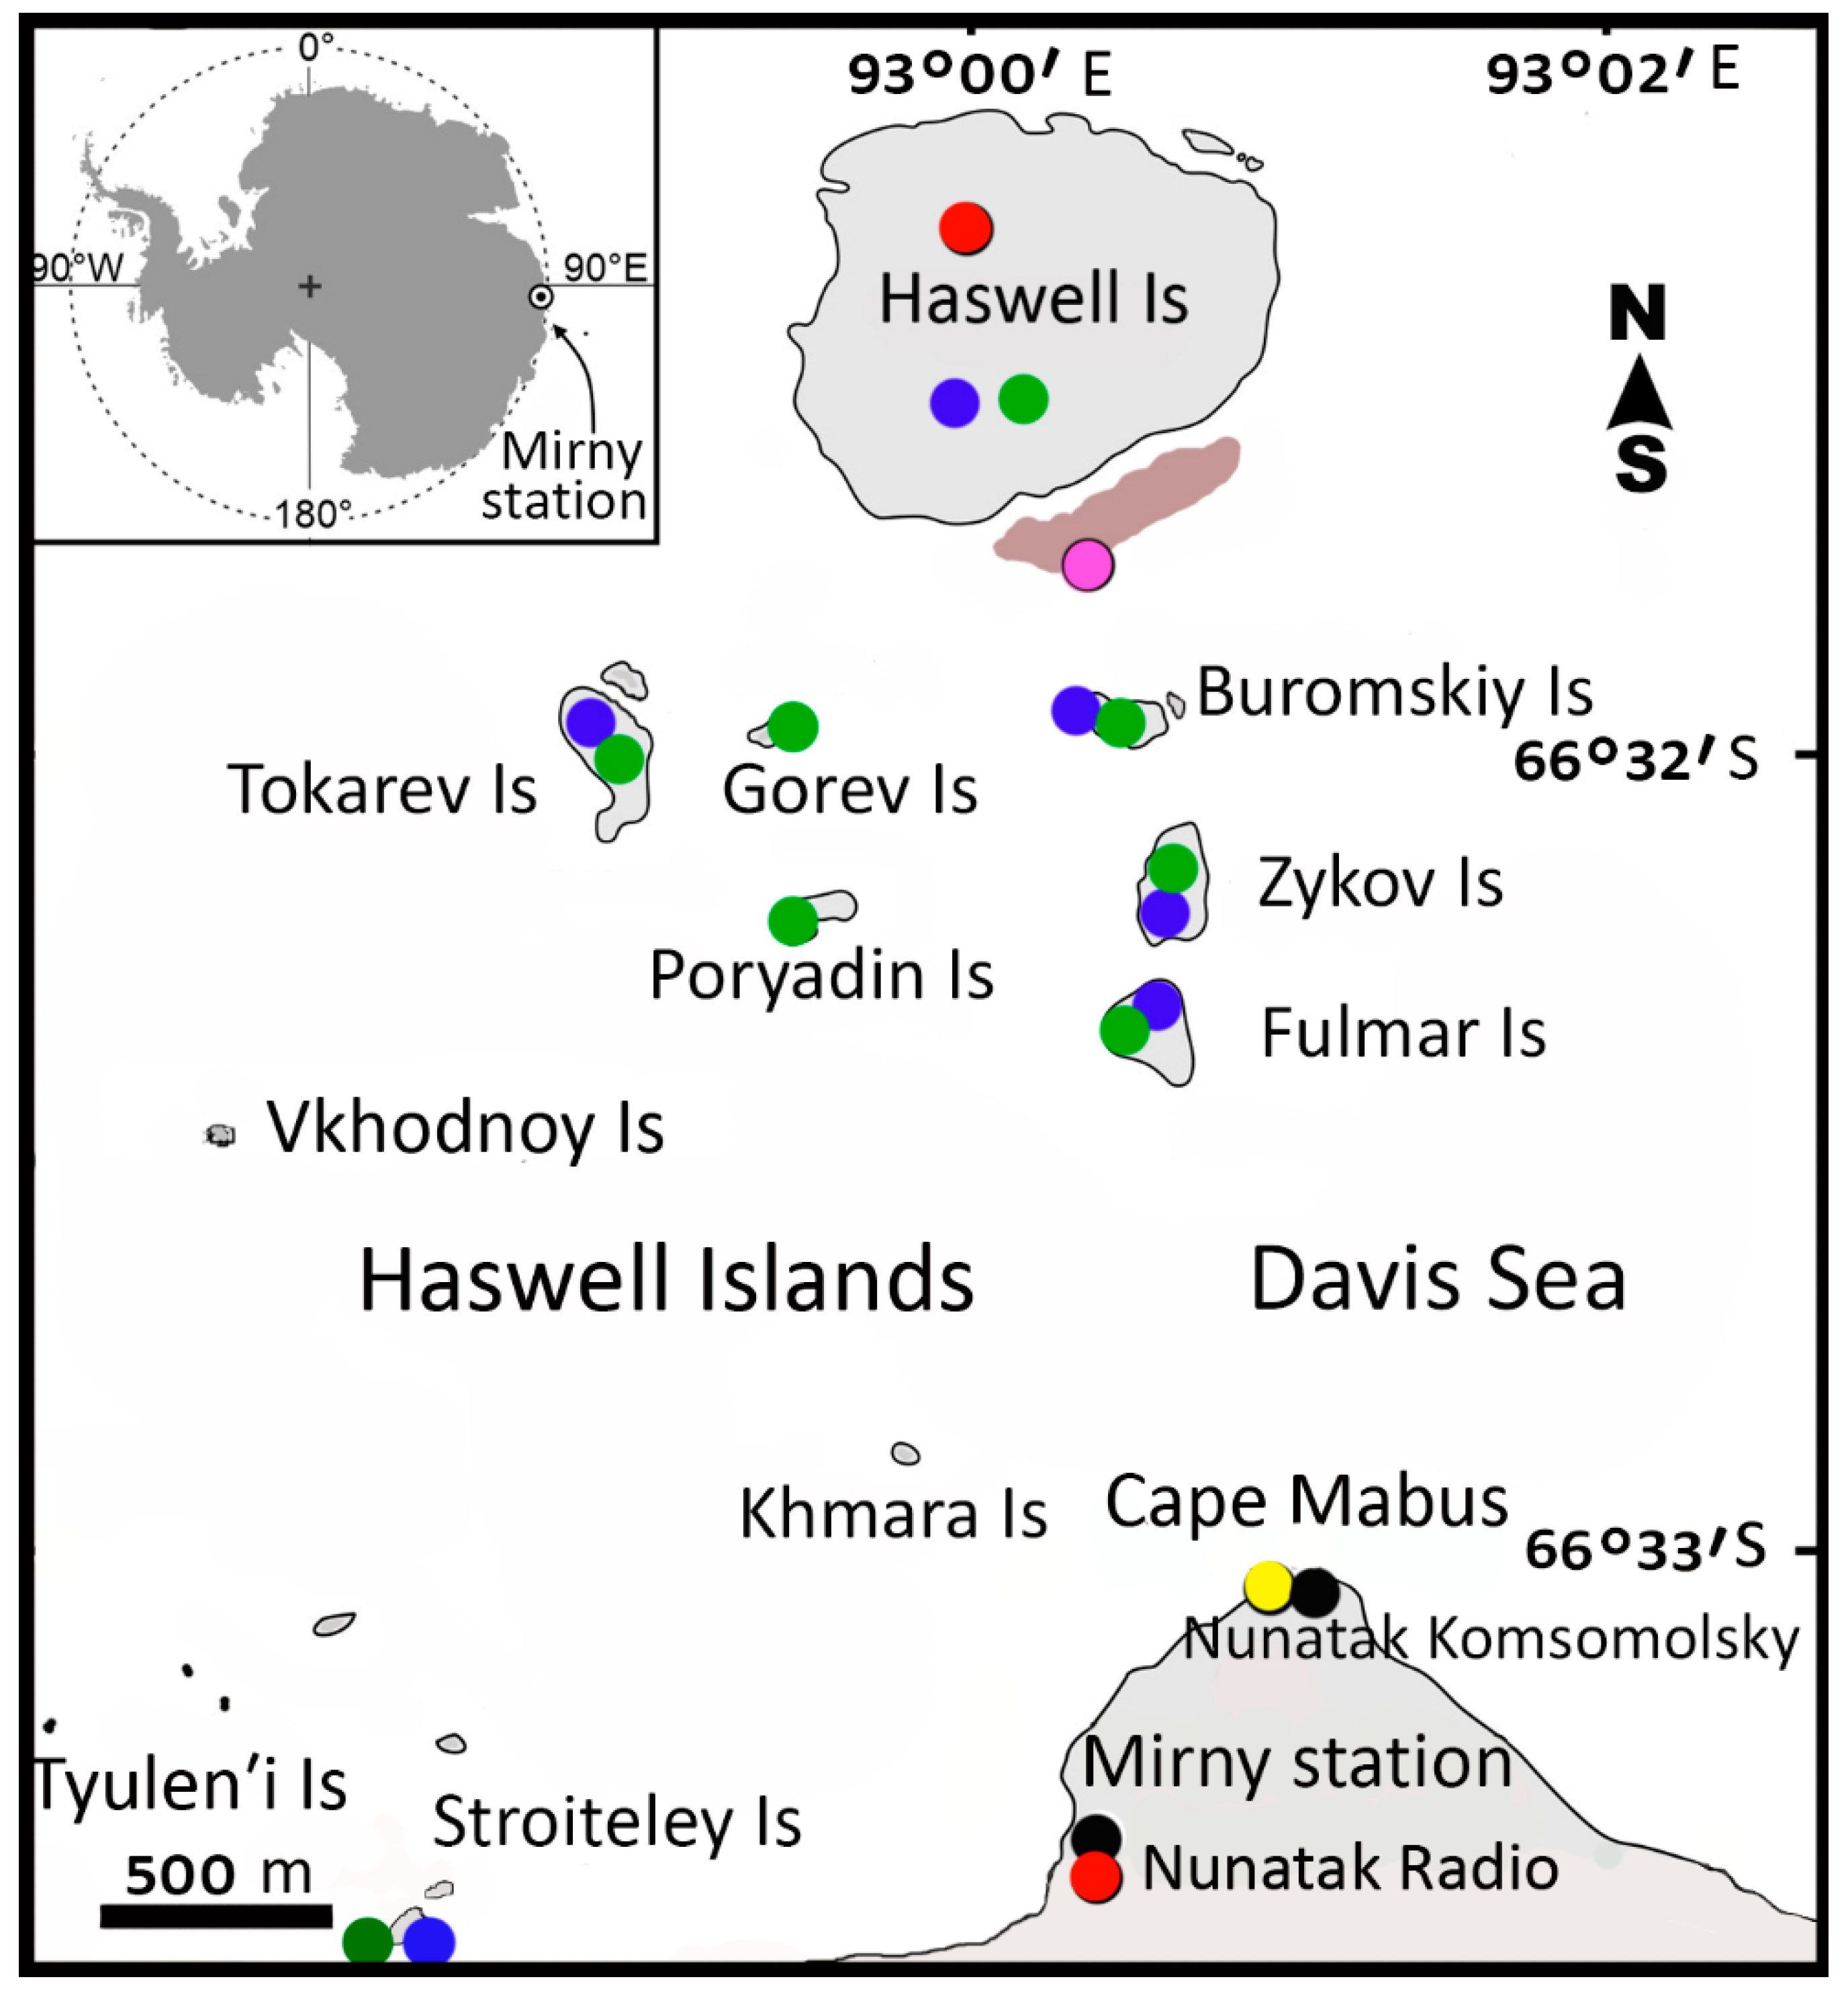 Birds | Free Full-Text | Macroplastic in Seabirds at Mirny, Antarctica |  HTML